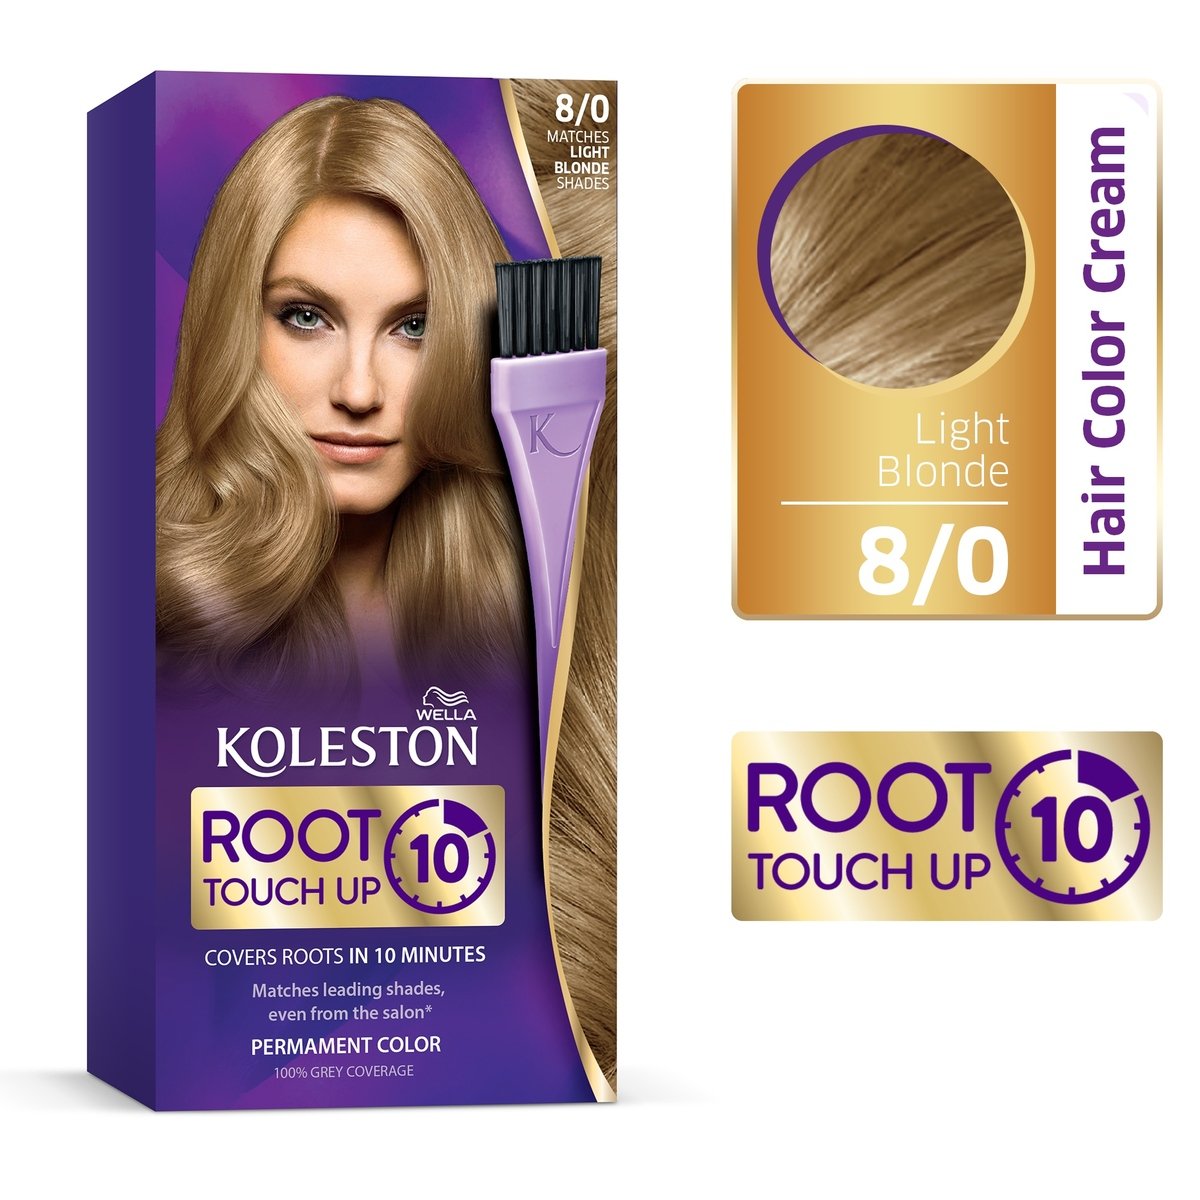 Koleston Root Touch Up 8/0 Light Blonde 1 pkt